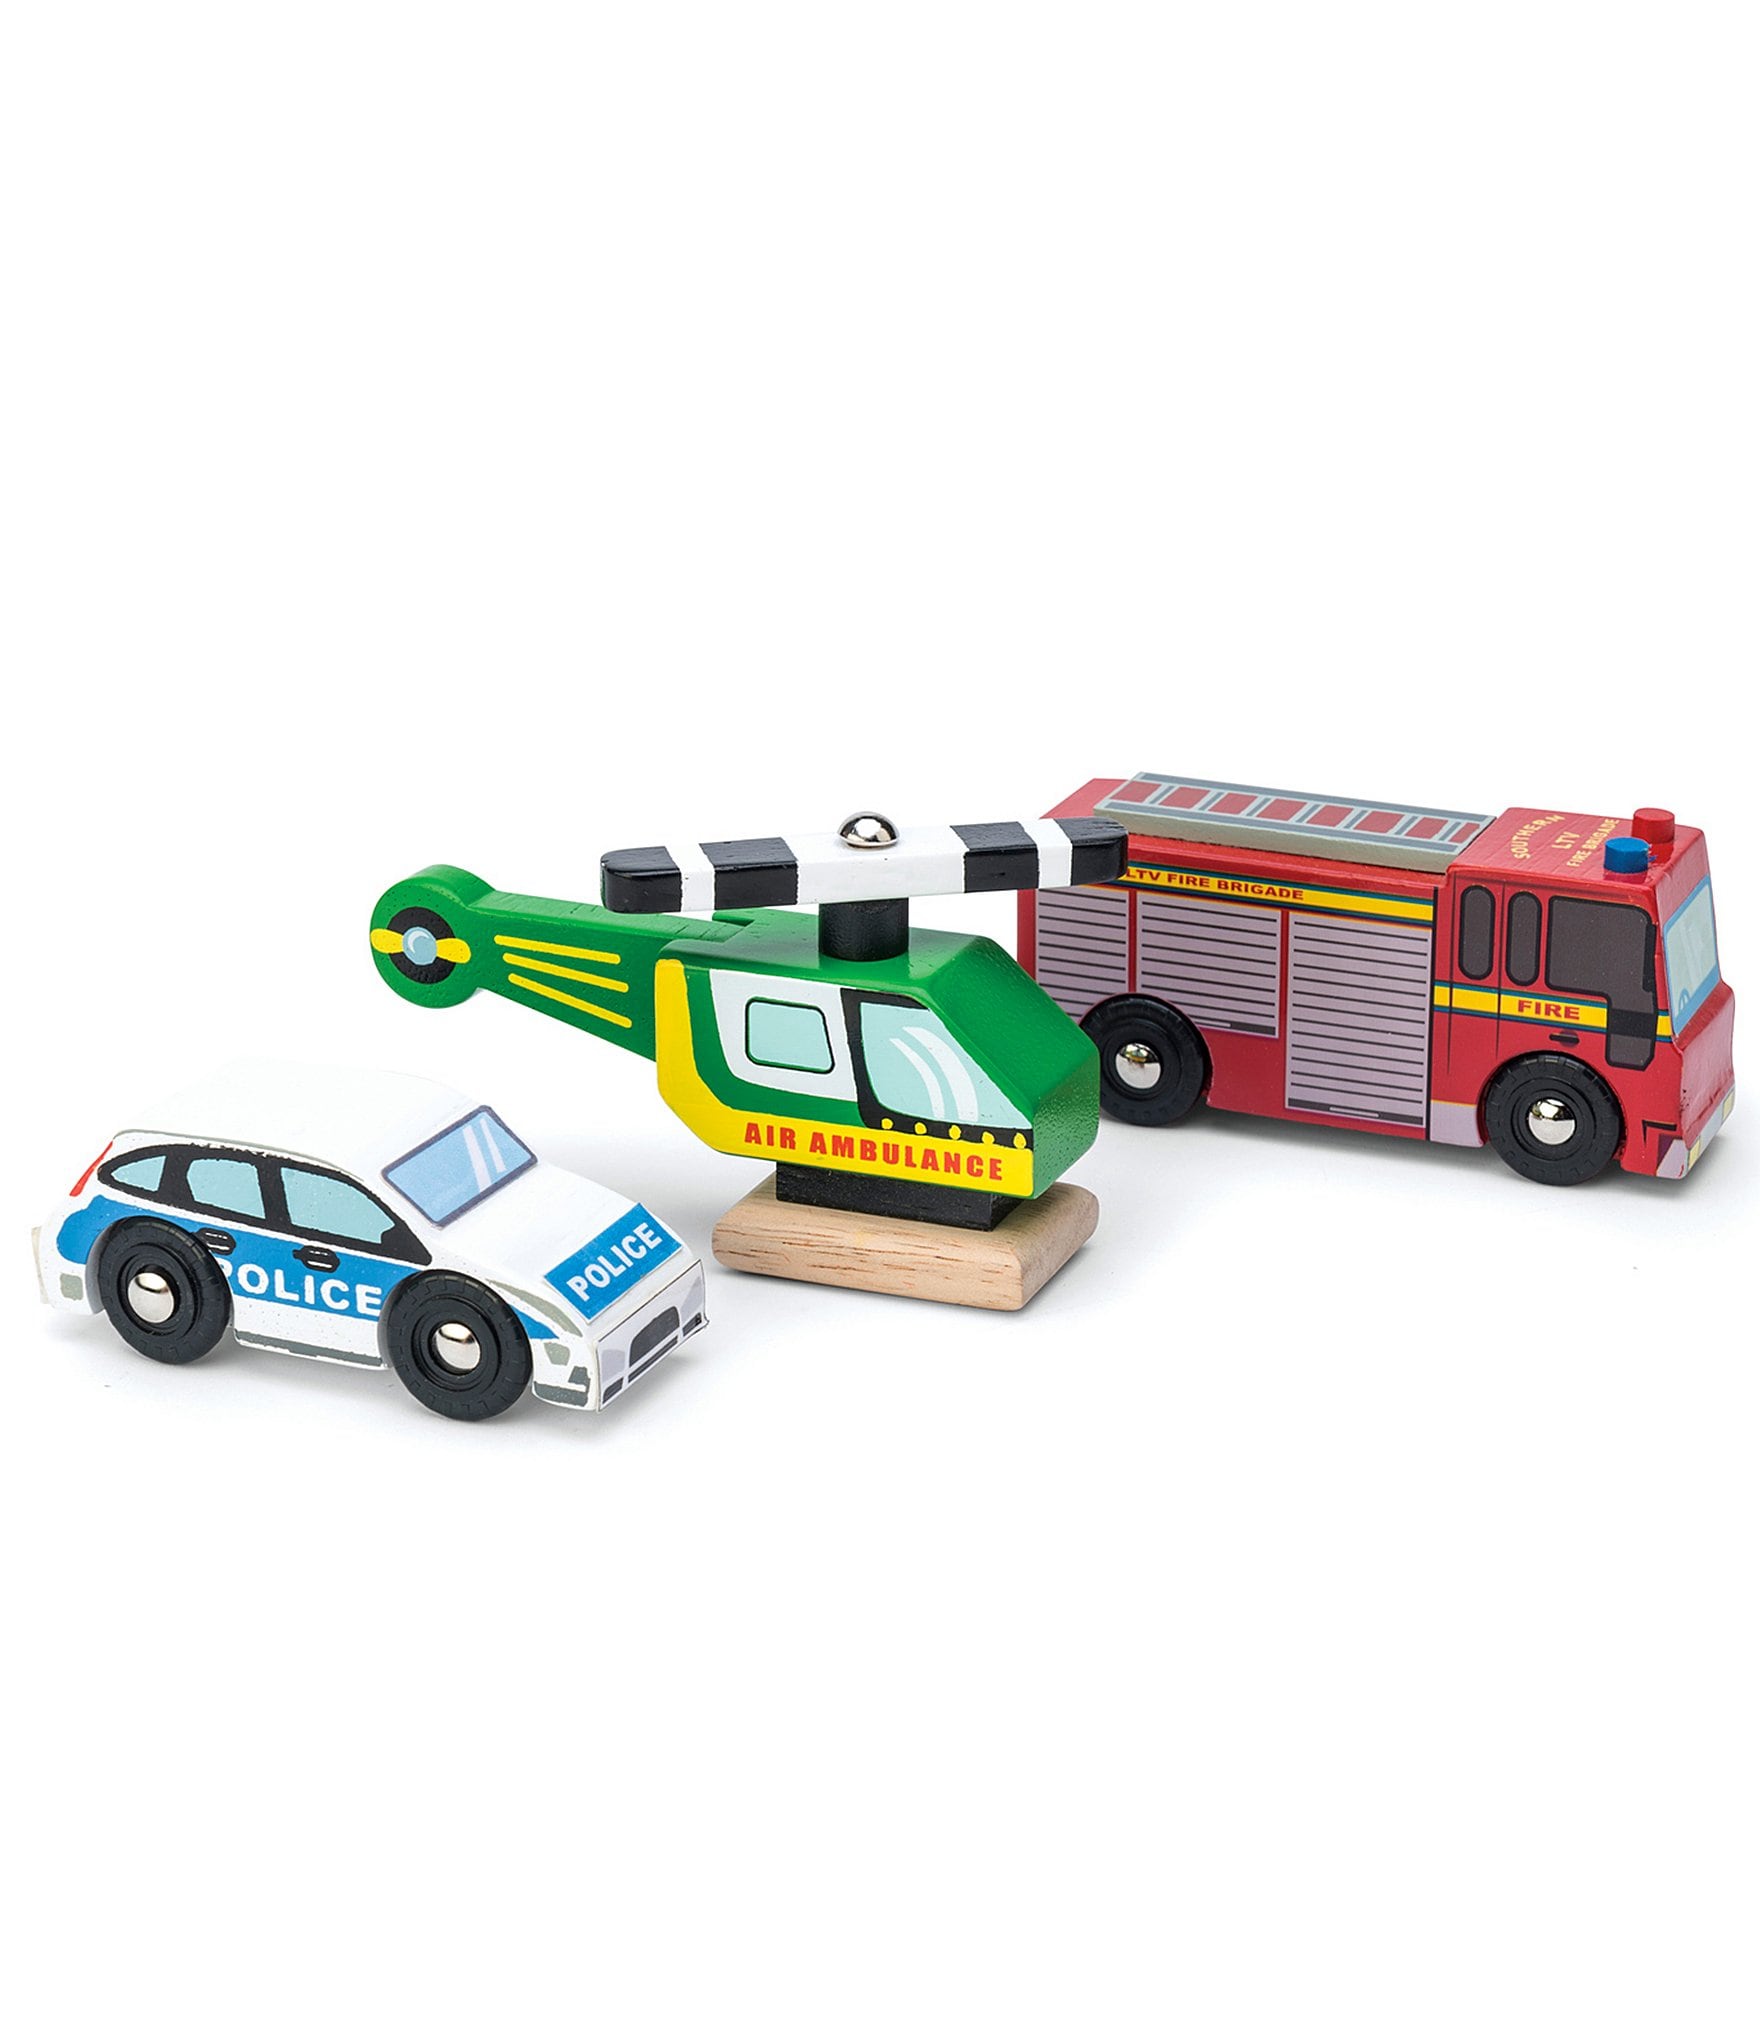 emergency toy cars